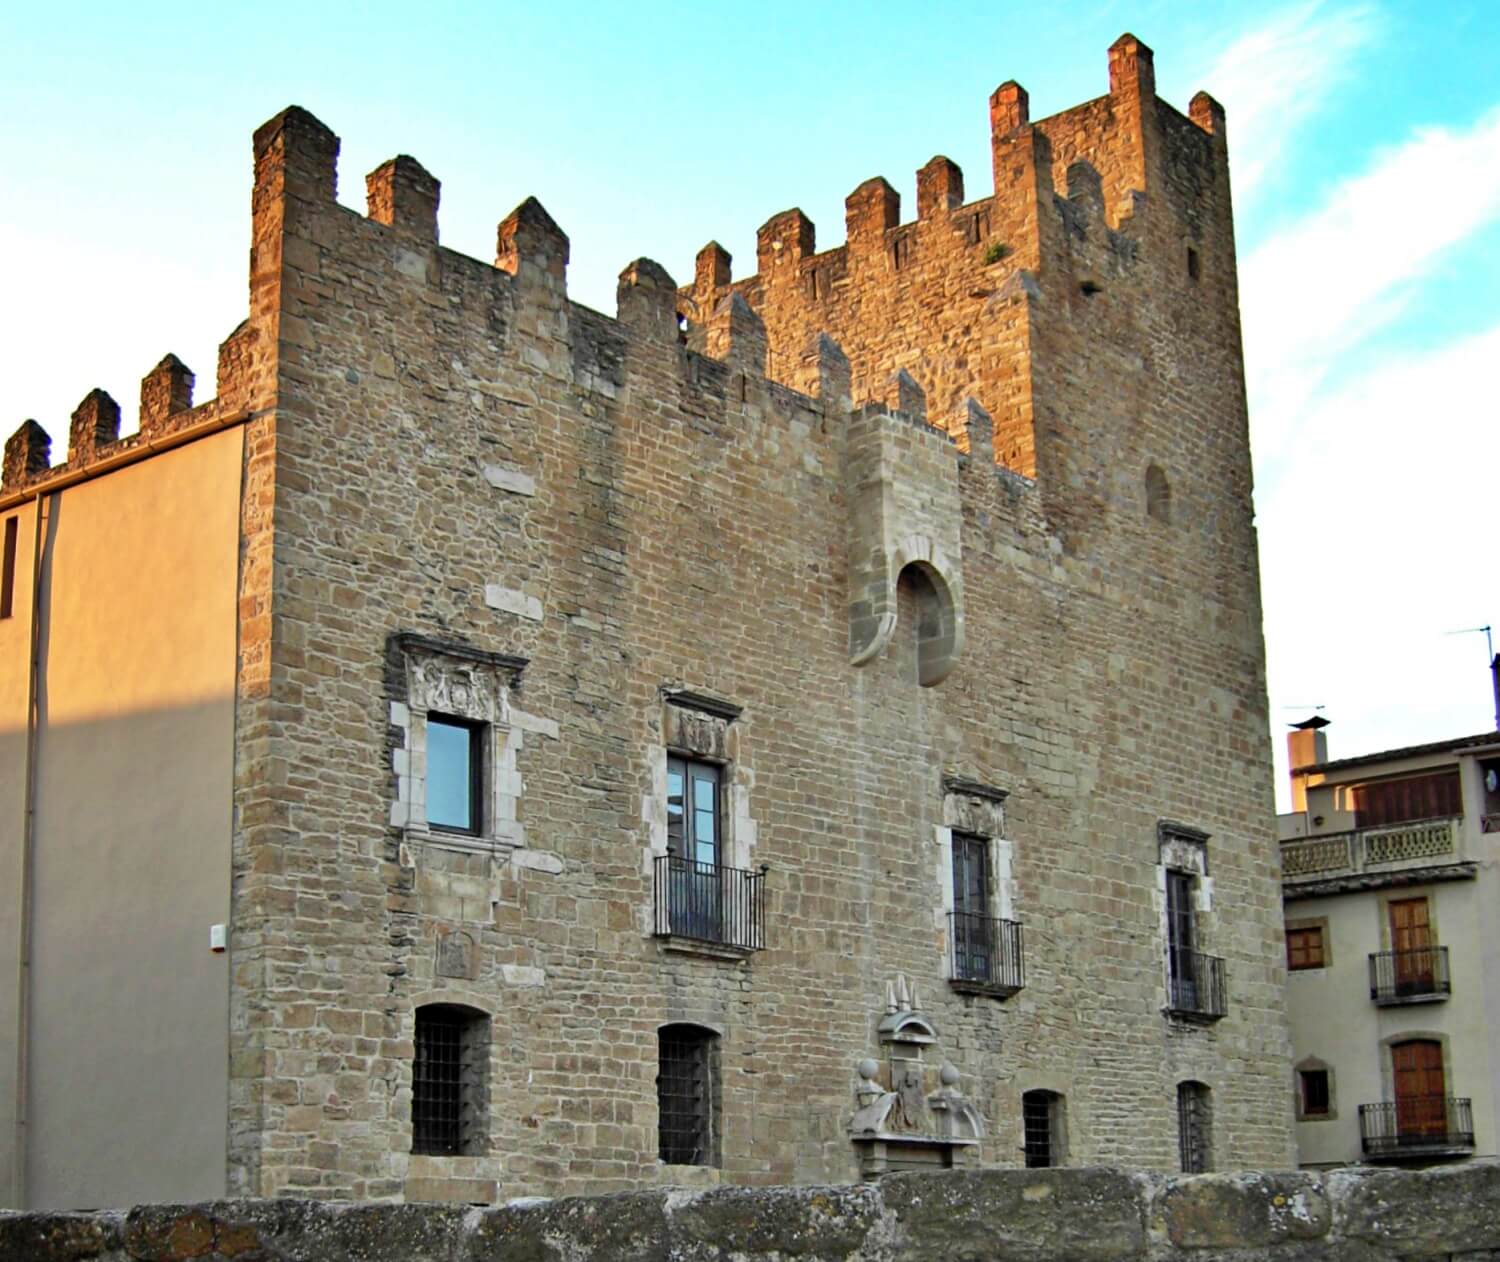 Castle - Palace of La Bisbal